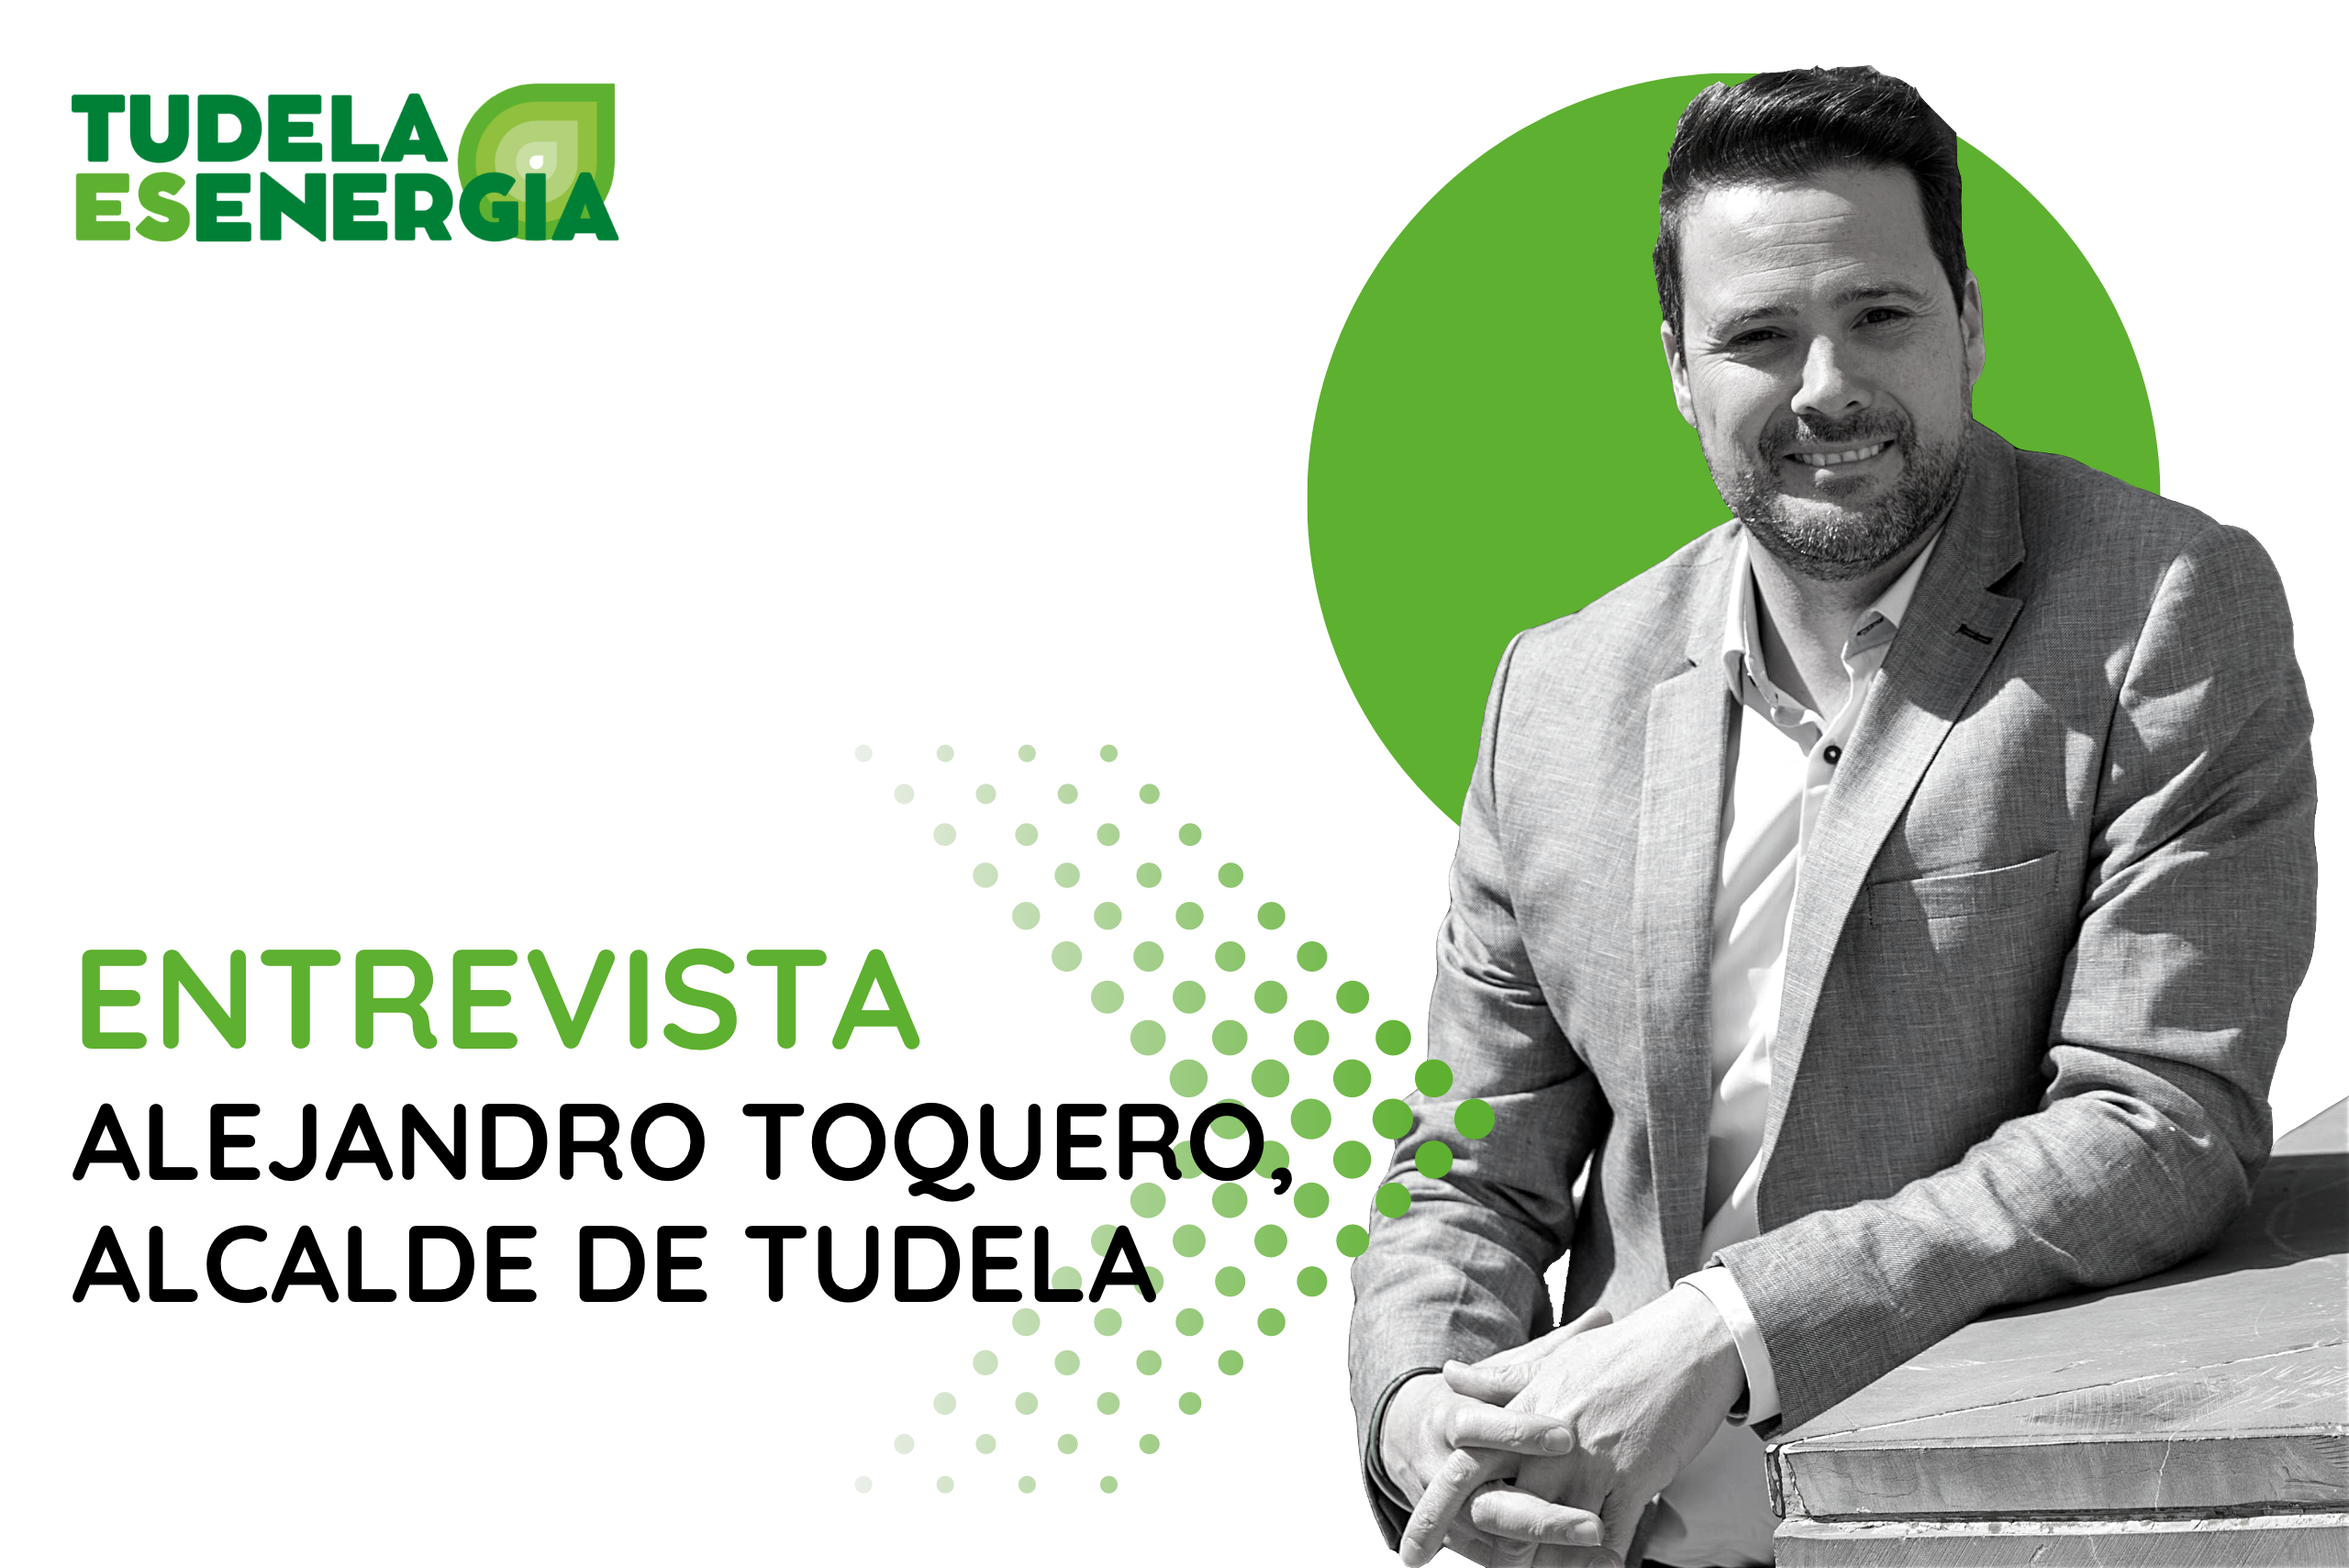 Entrevista a Alejandro Toquero, alcalde de Tudela